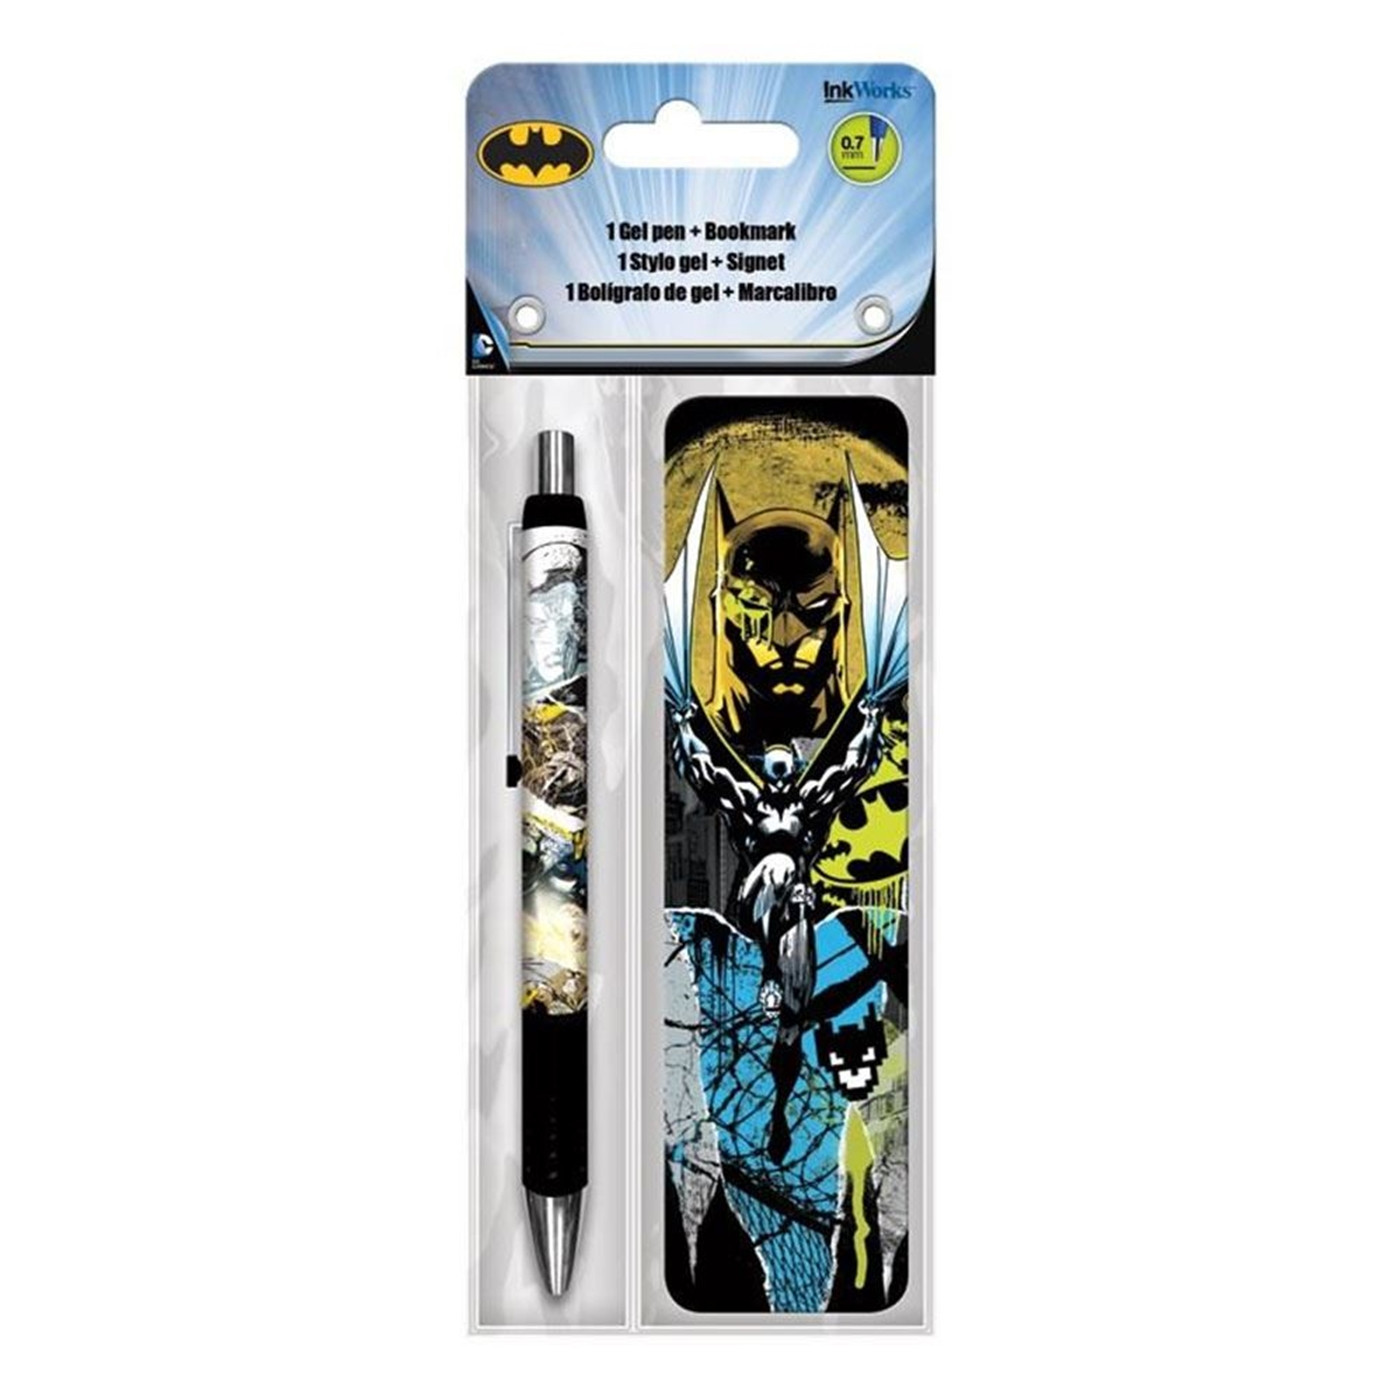 Batman Gel Pen & Bookmark Pack